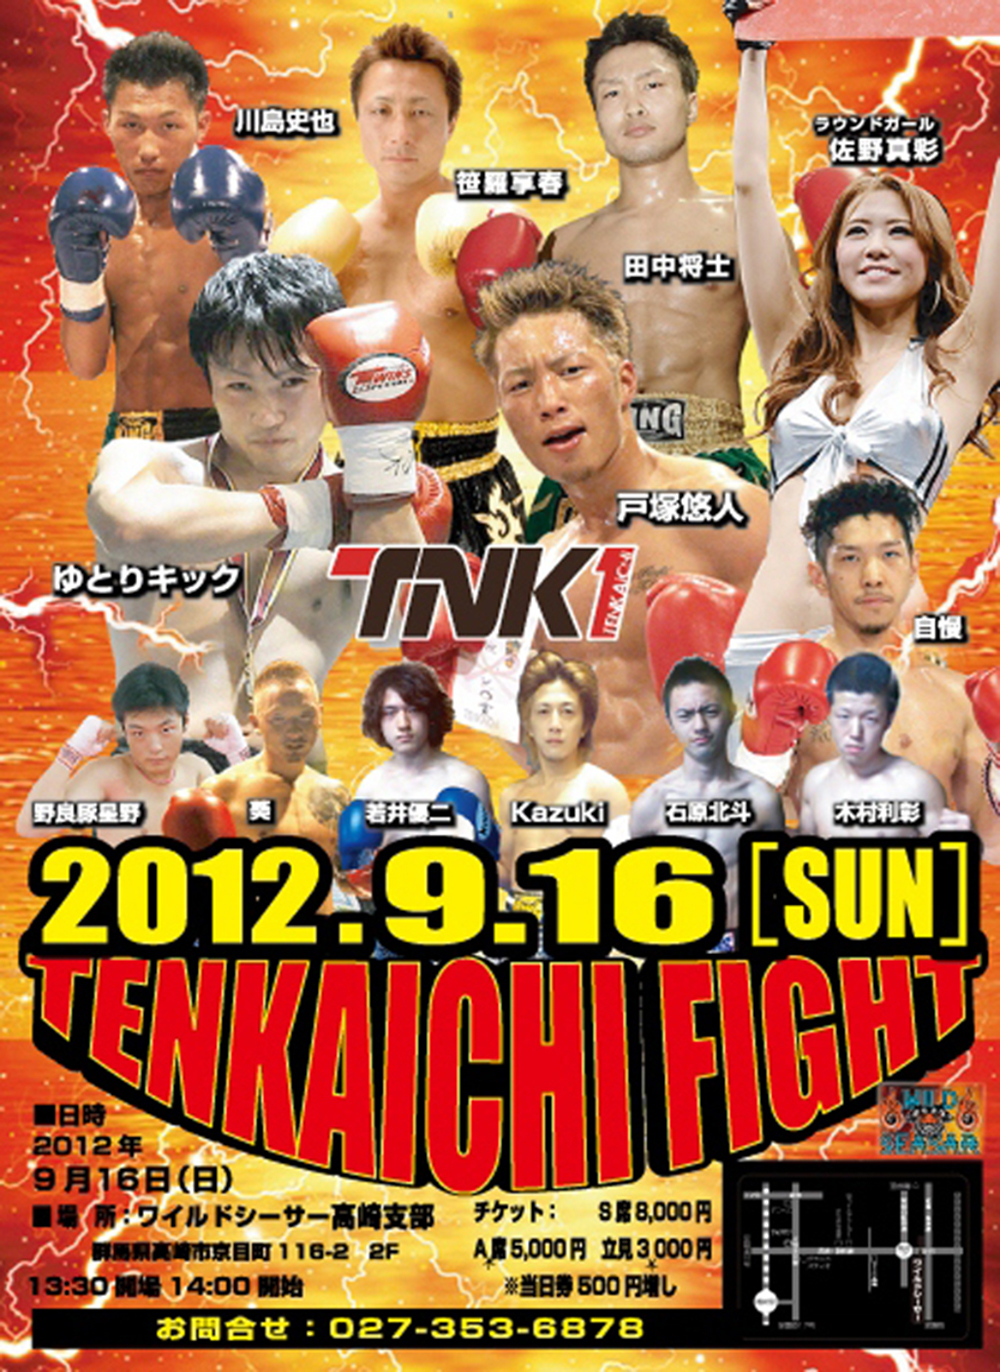 TENKAICHI FIGHT